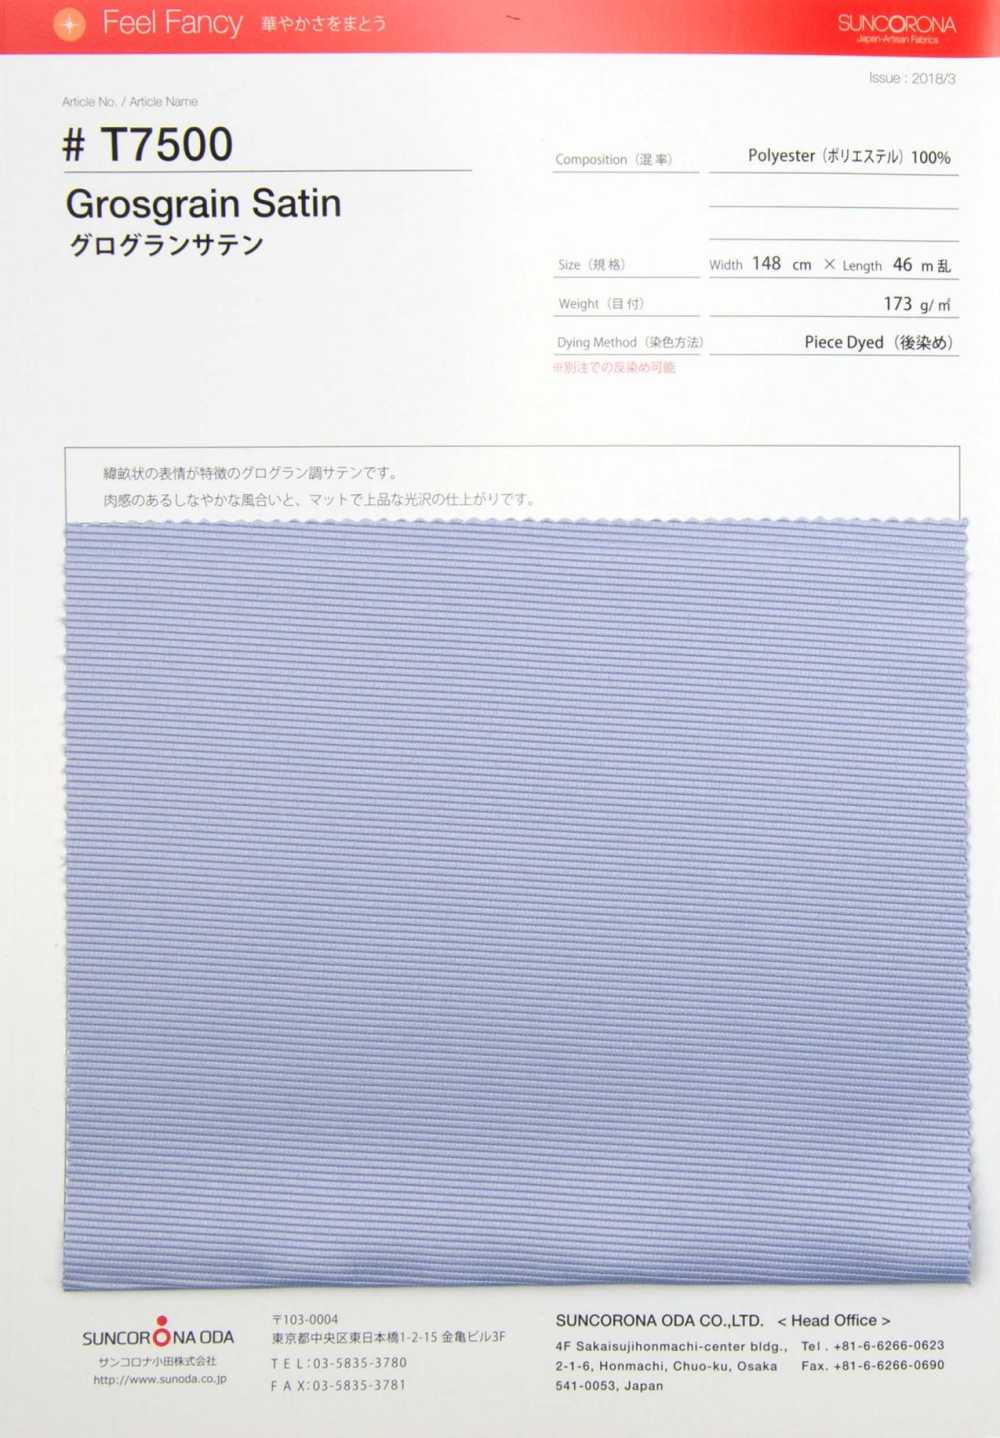 T7500 Grosgrain Satin[Textile / Fabric] Suncorona Oda